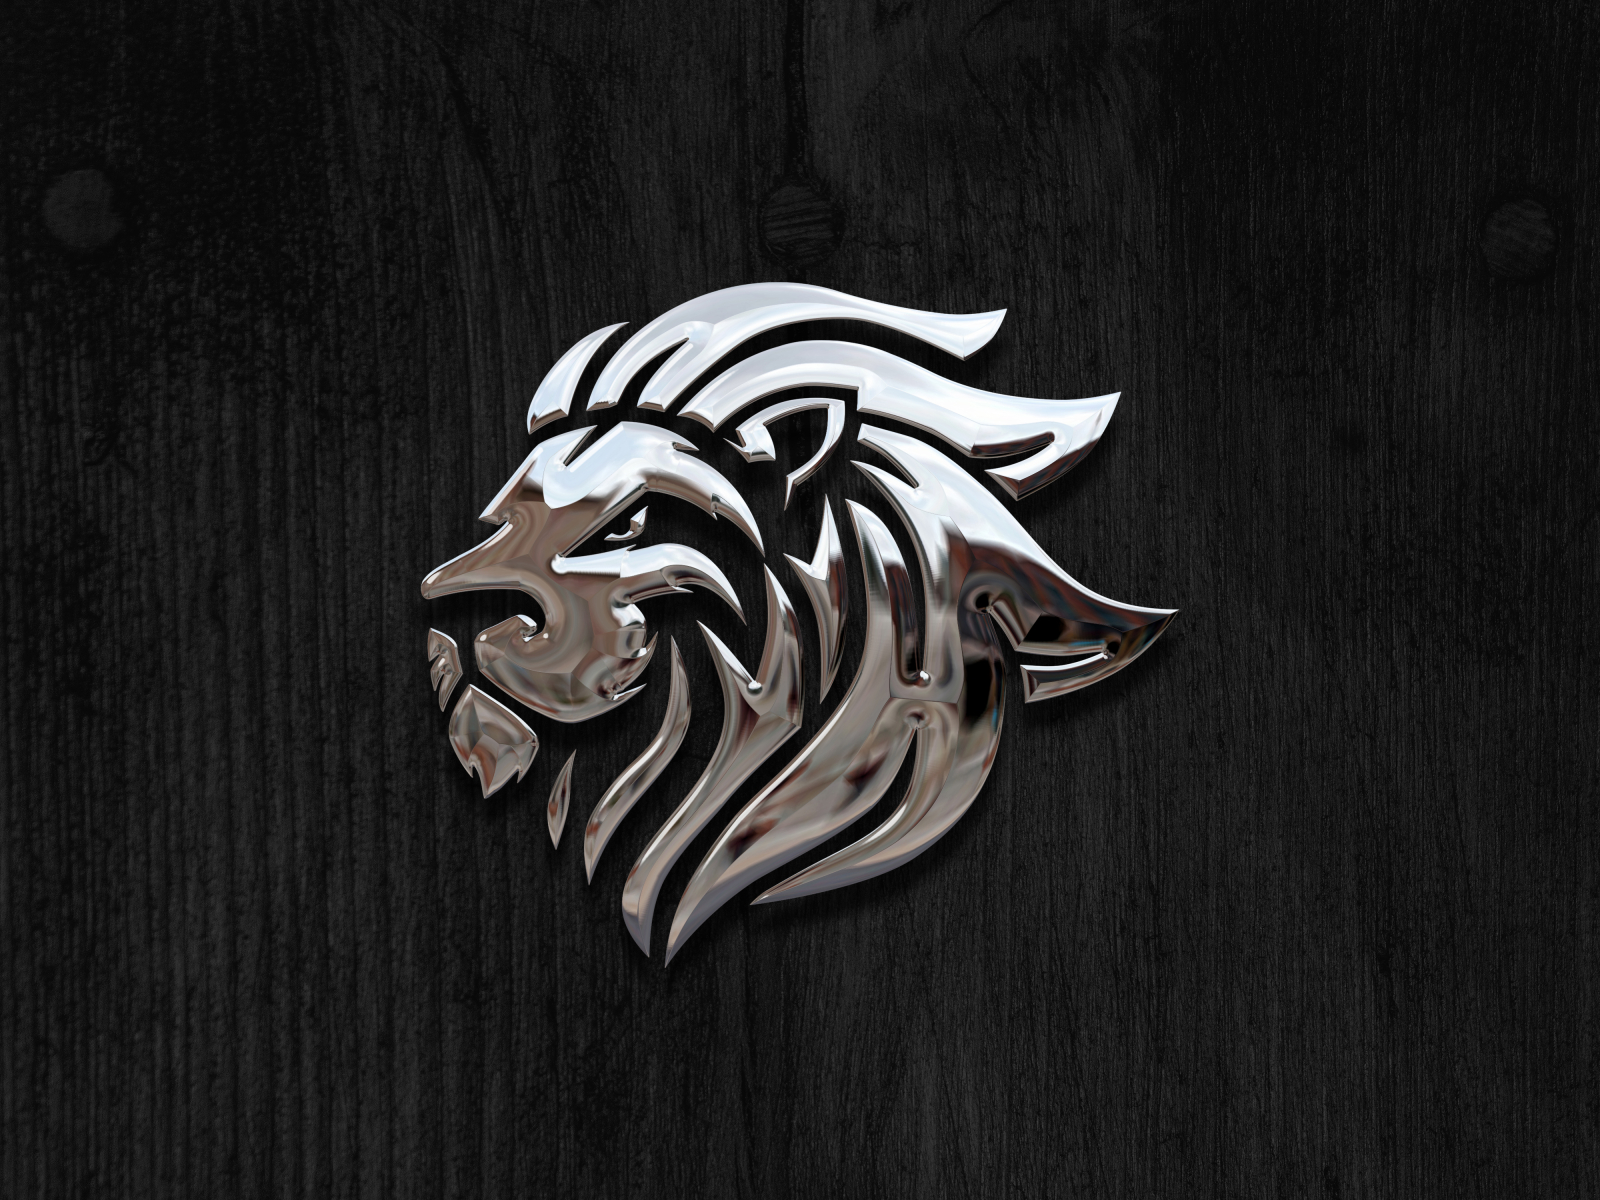 Cannes Lions Logo PNG Transparent & SVG Vector - Freebie Supply